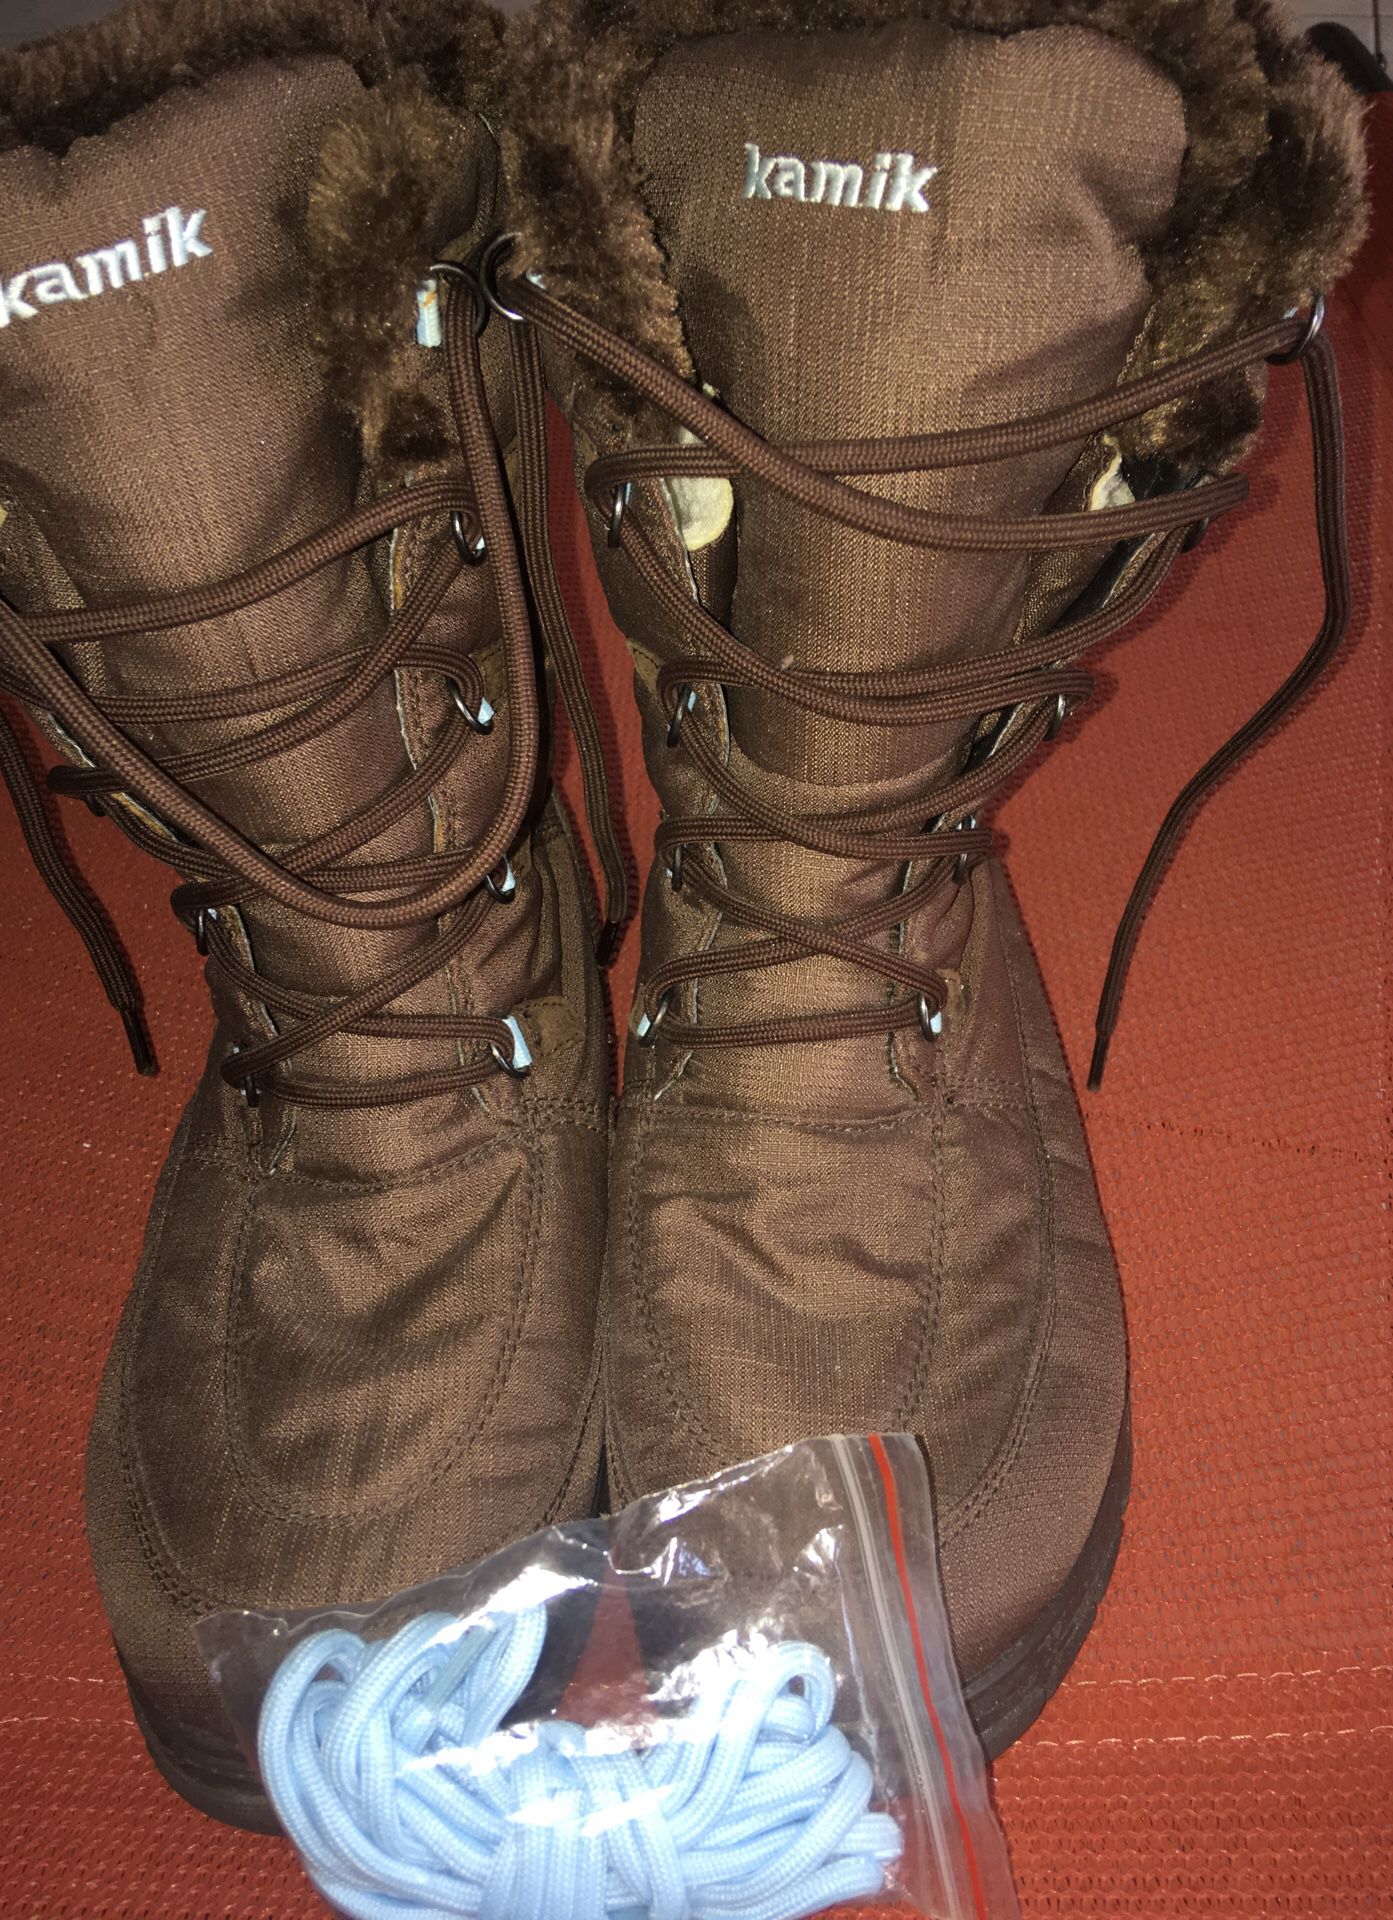 Kamik Women’s Brooklyn waterproof snow winter boots size 10 dark brown rain Waterproof woman’s Sorel